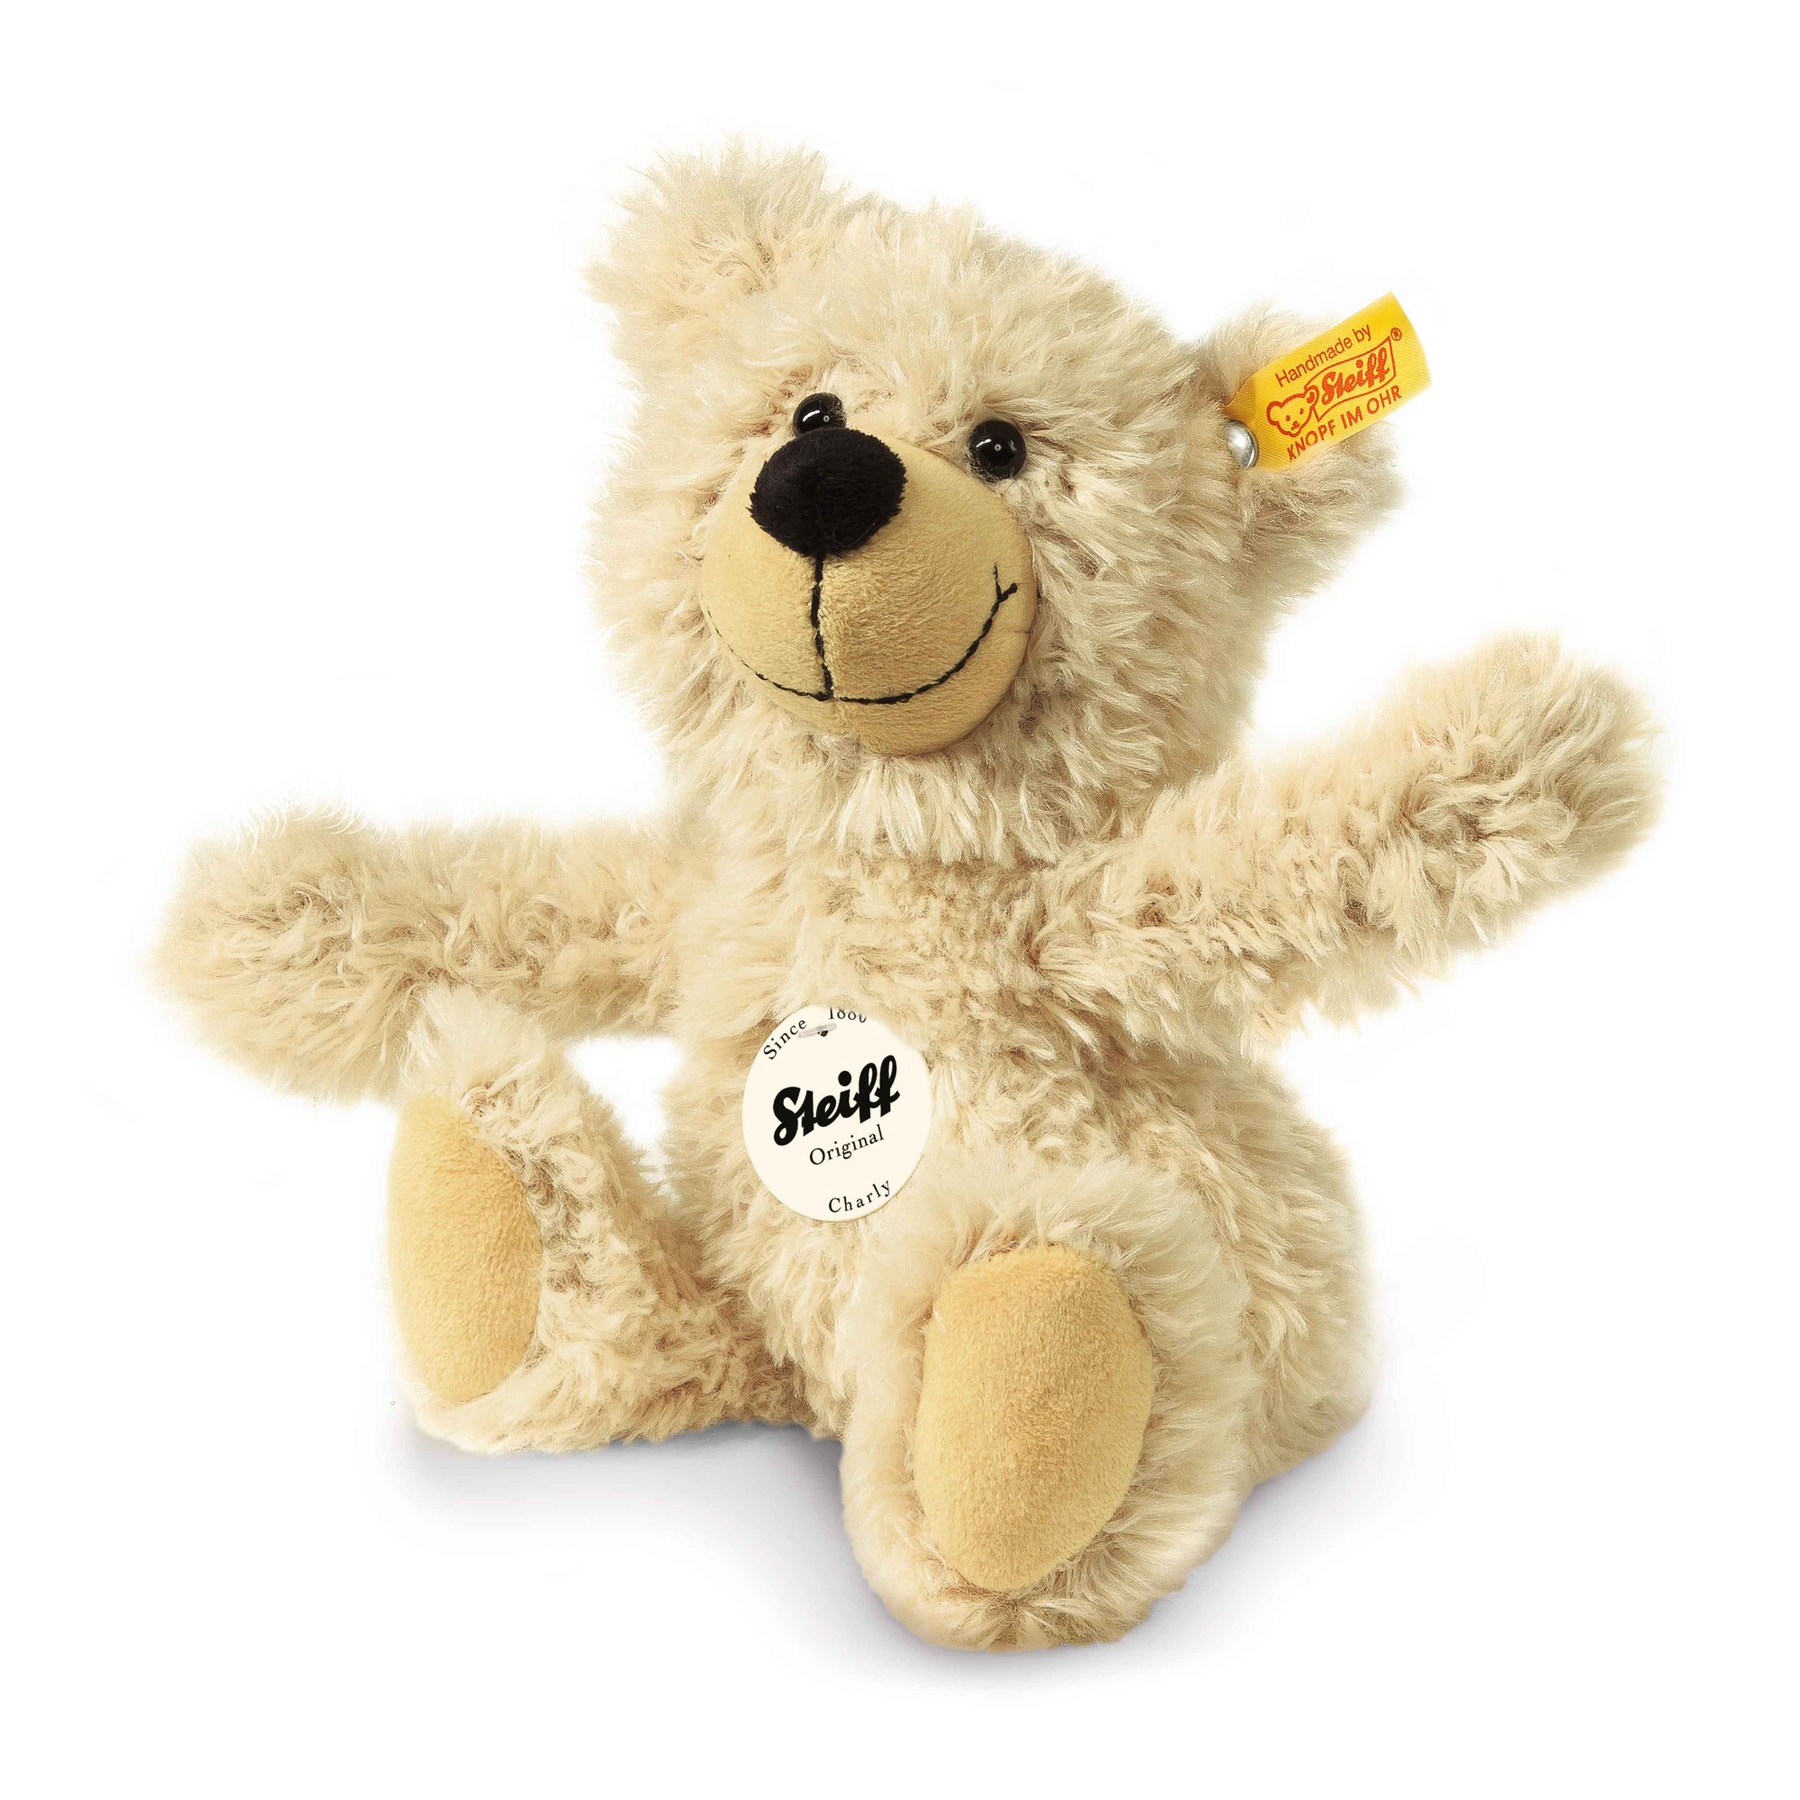 Charly dangling Teddy bear